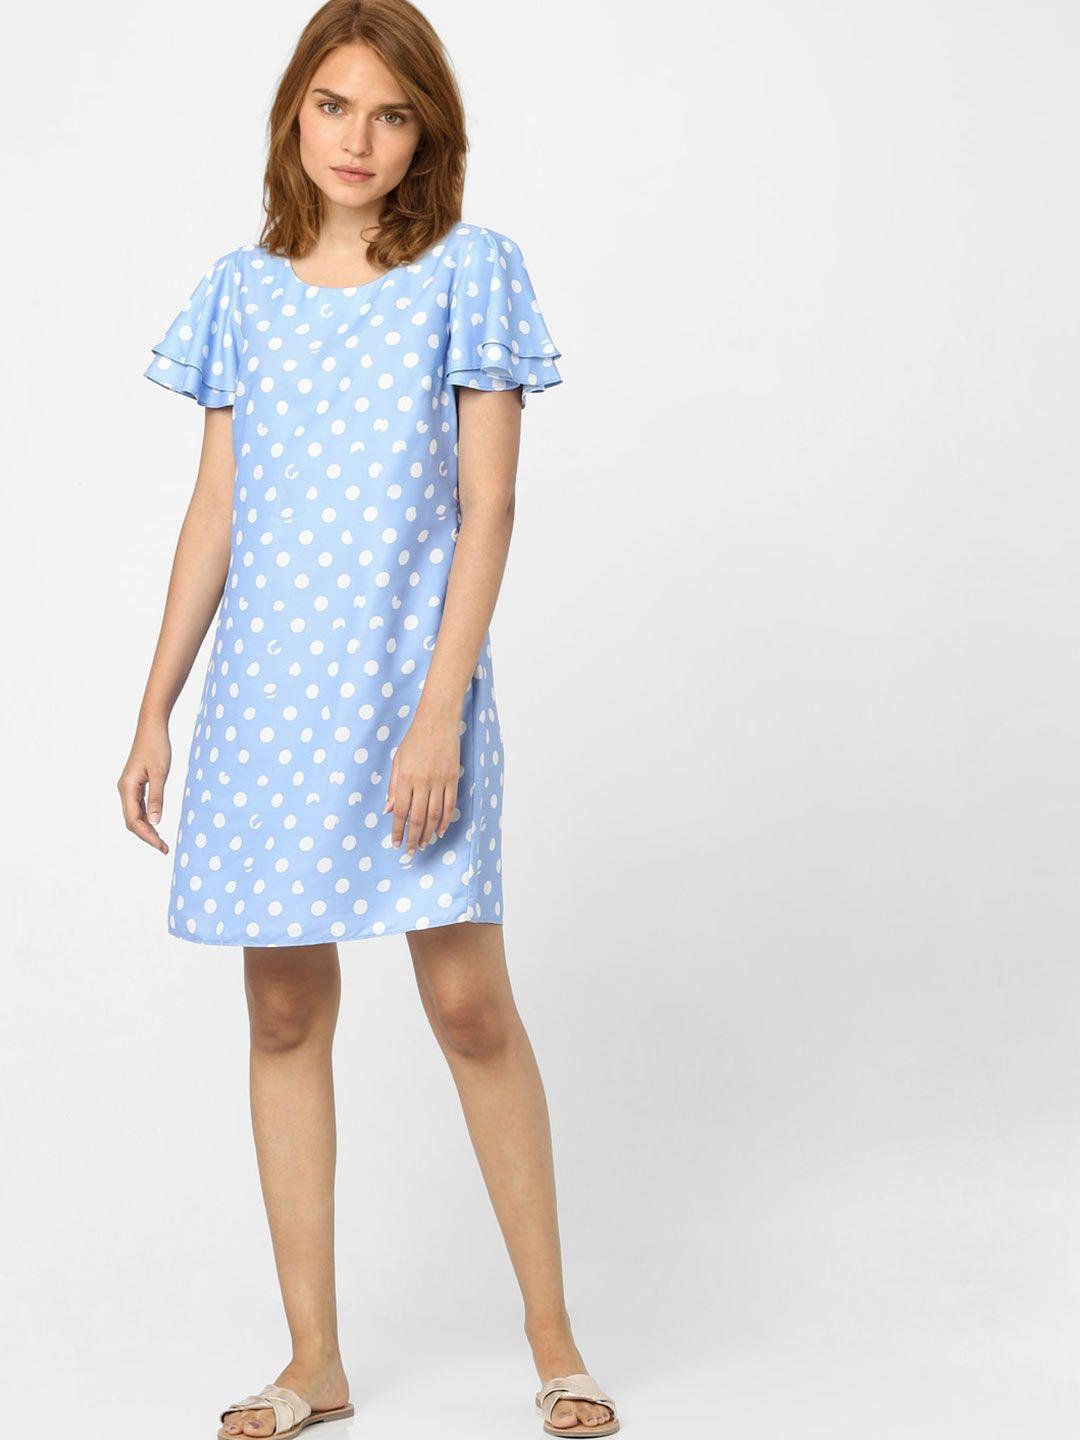 vero moda blue polka dots printed a-line dress